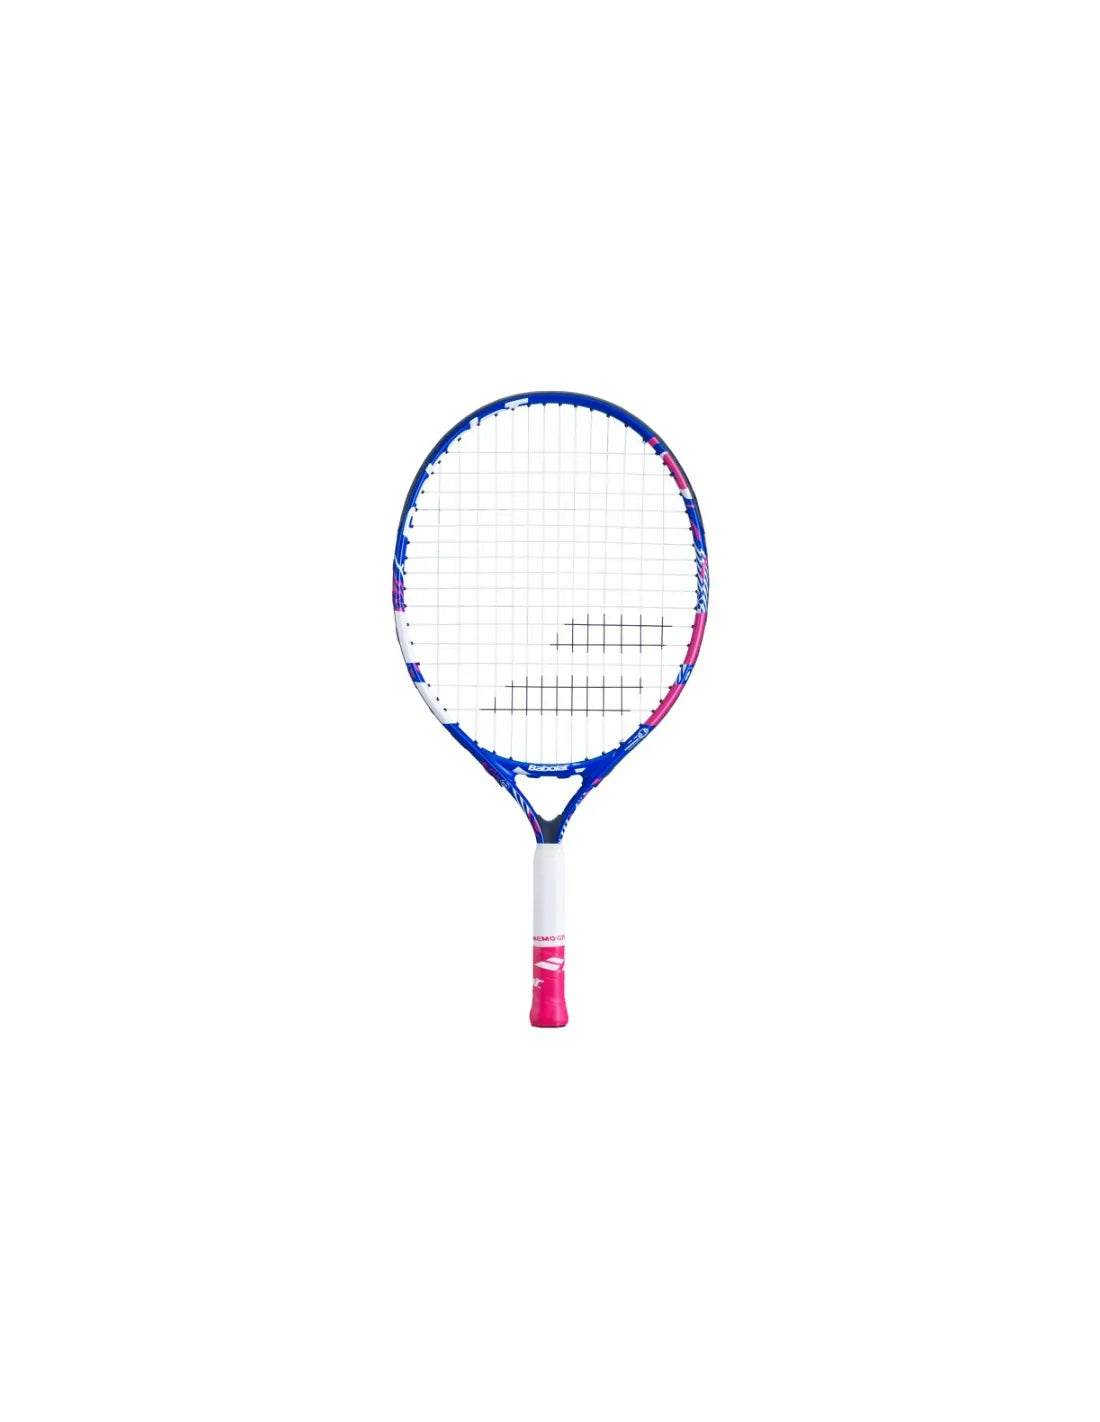 B-Fly Junior 21 Inch Tennis Racket